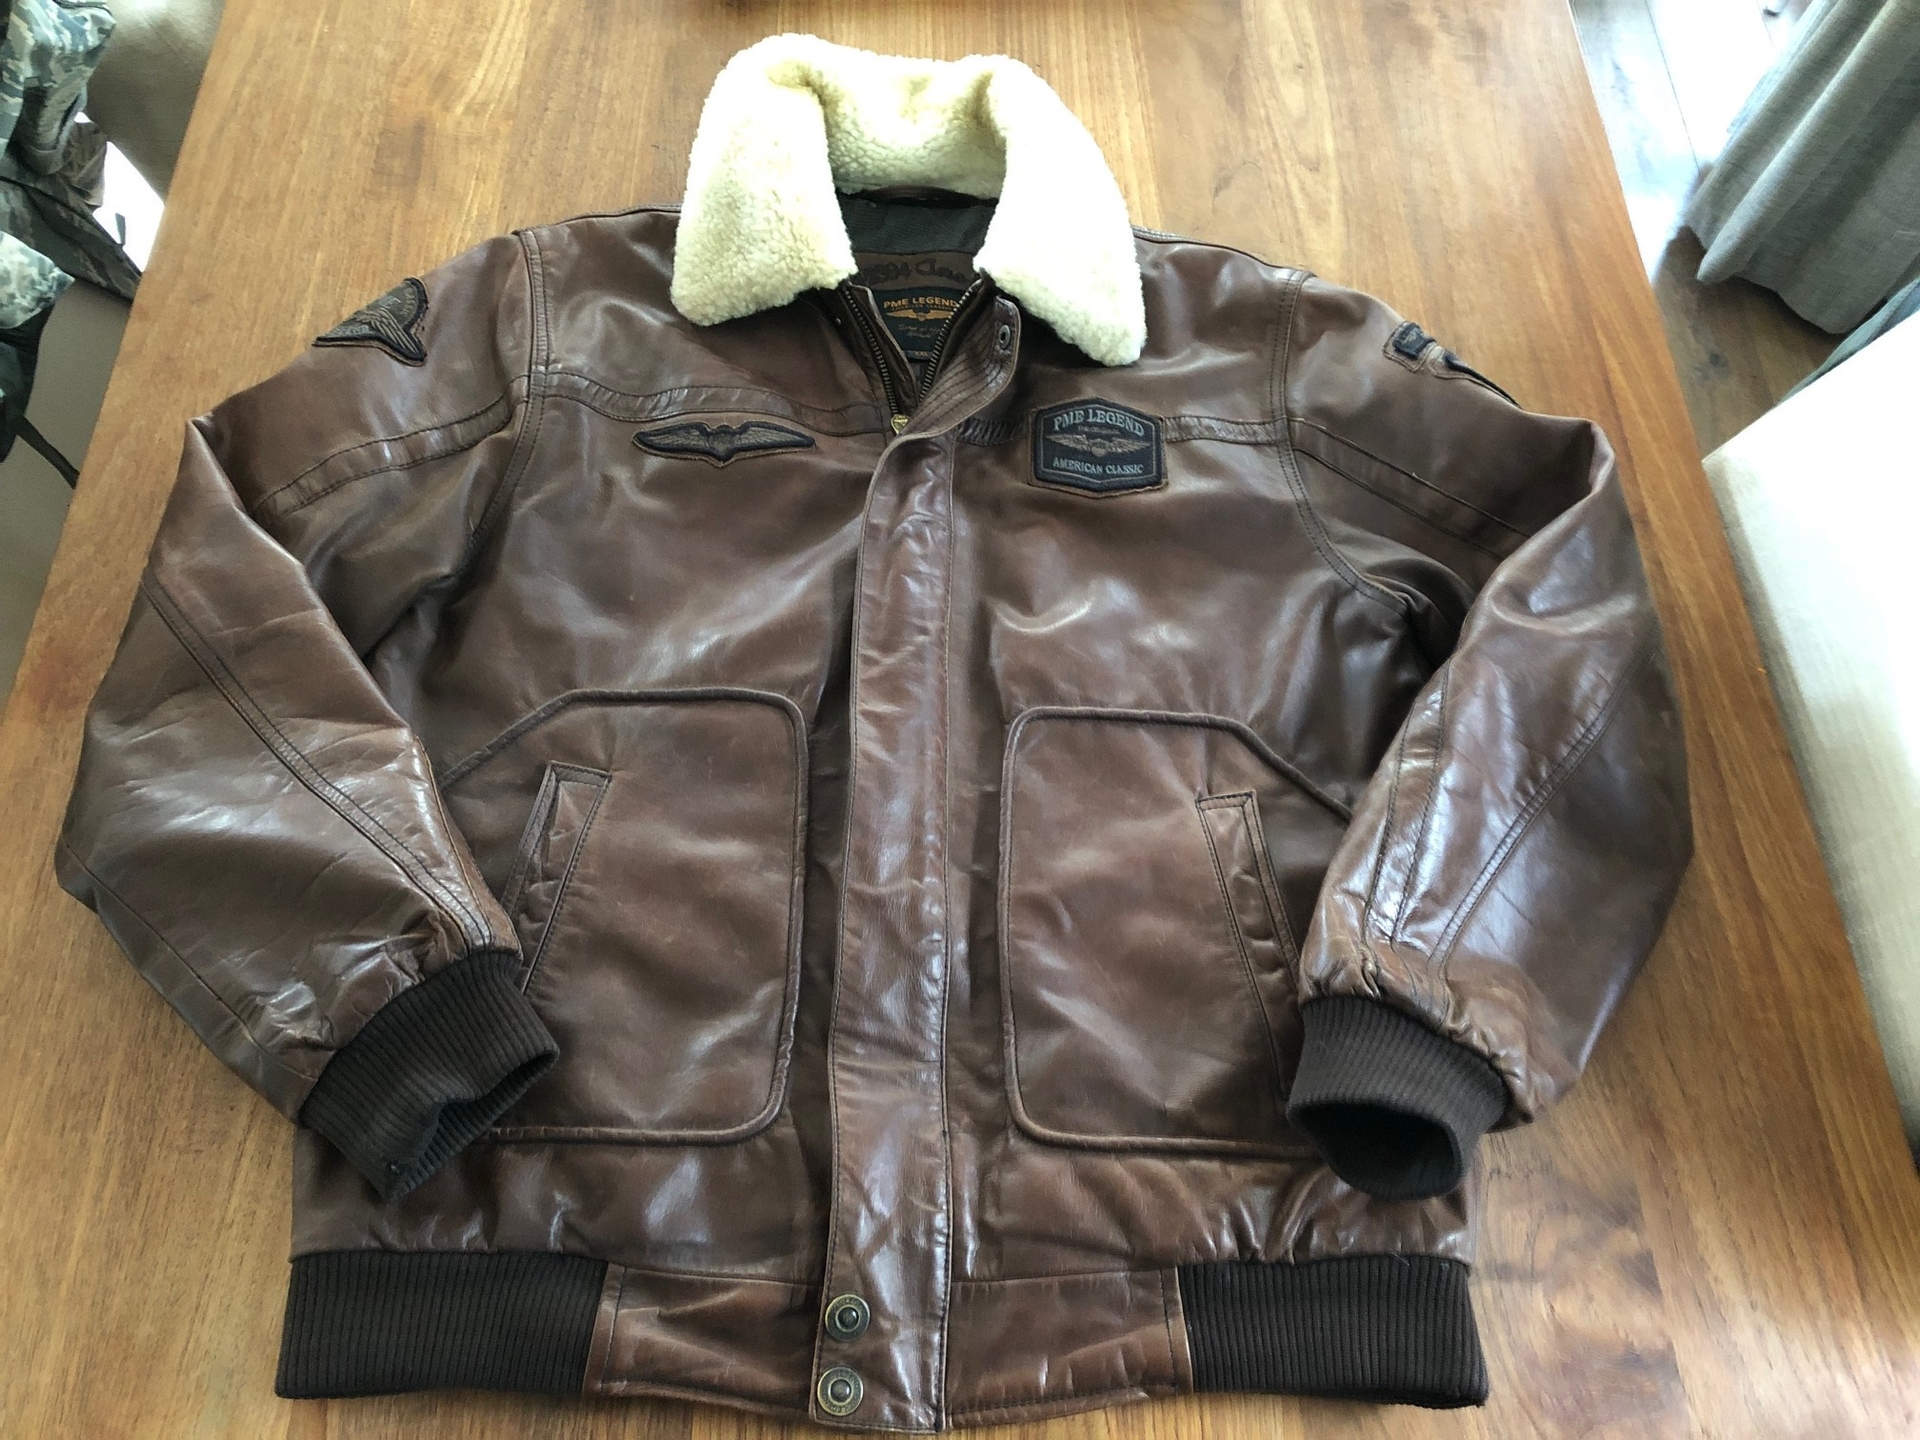 Melodieus Lang beest leather PME Legend flight jacket size XXL - the Aviation Store.net